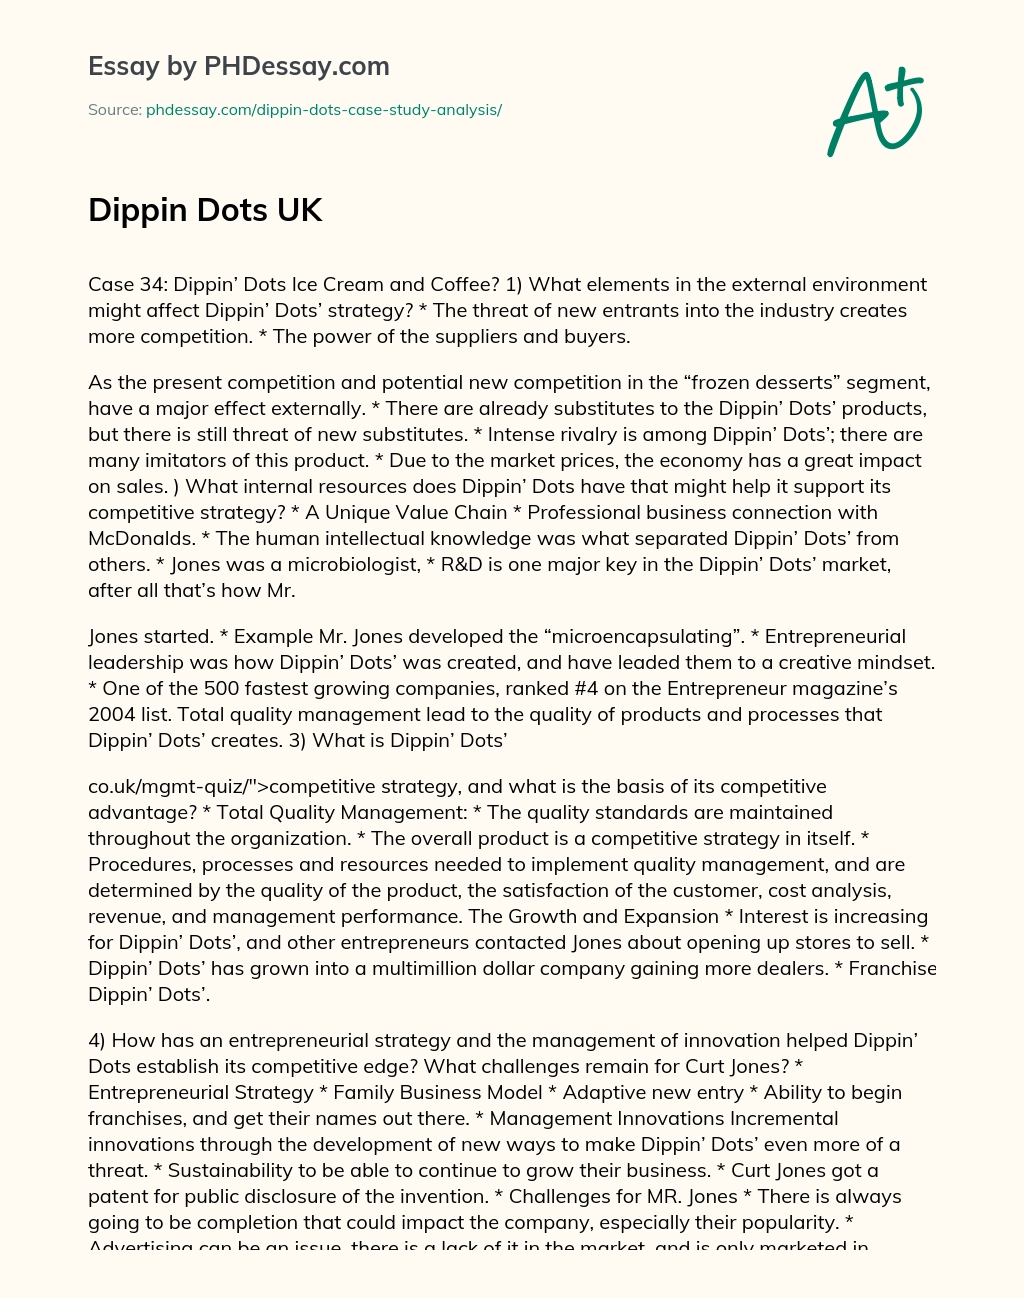 Dippin Dots UK essay